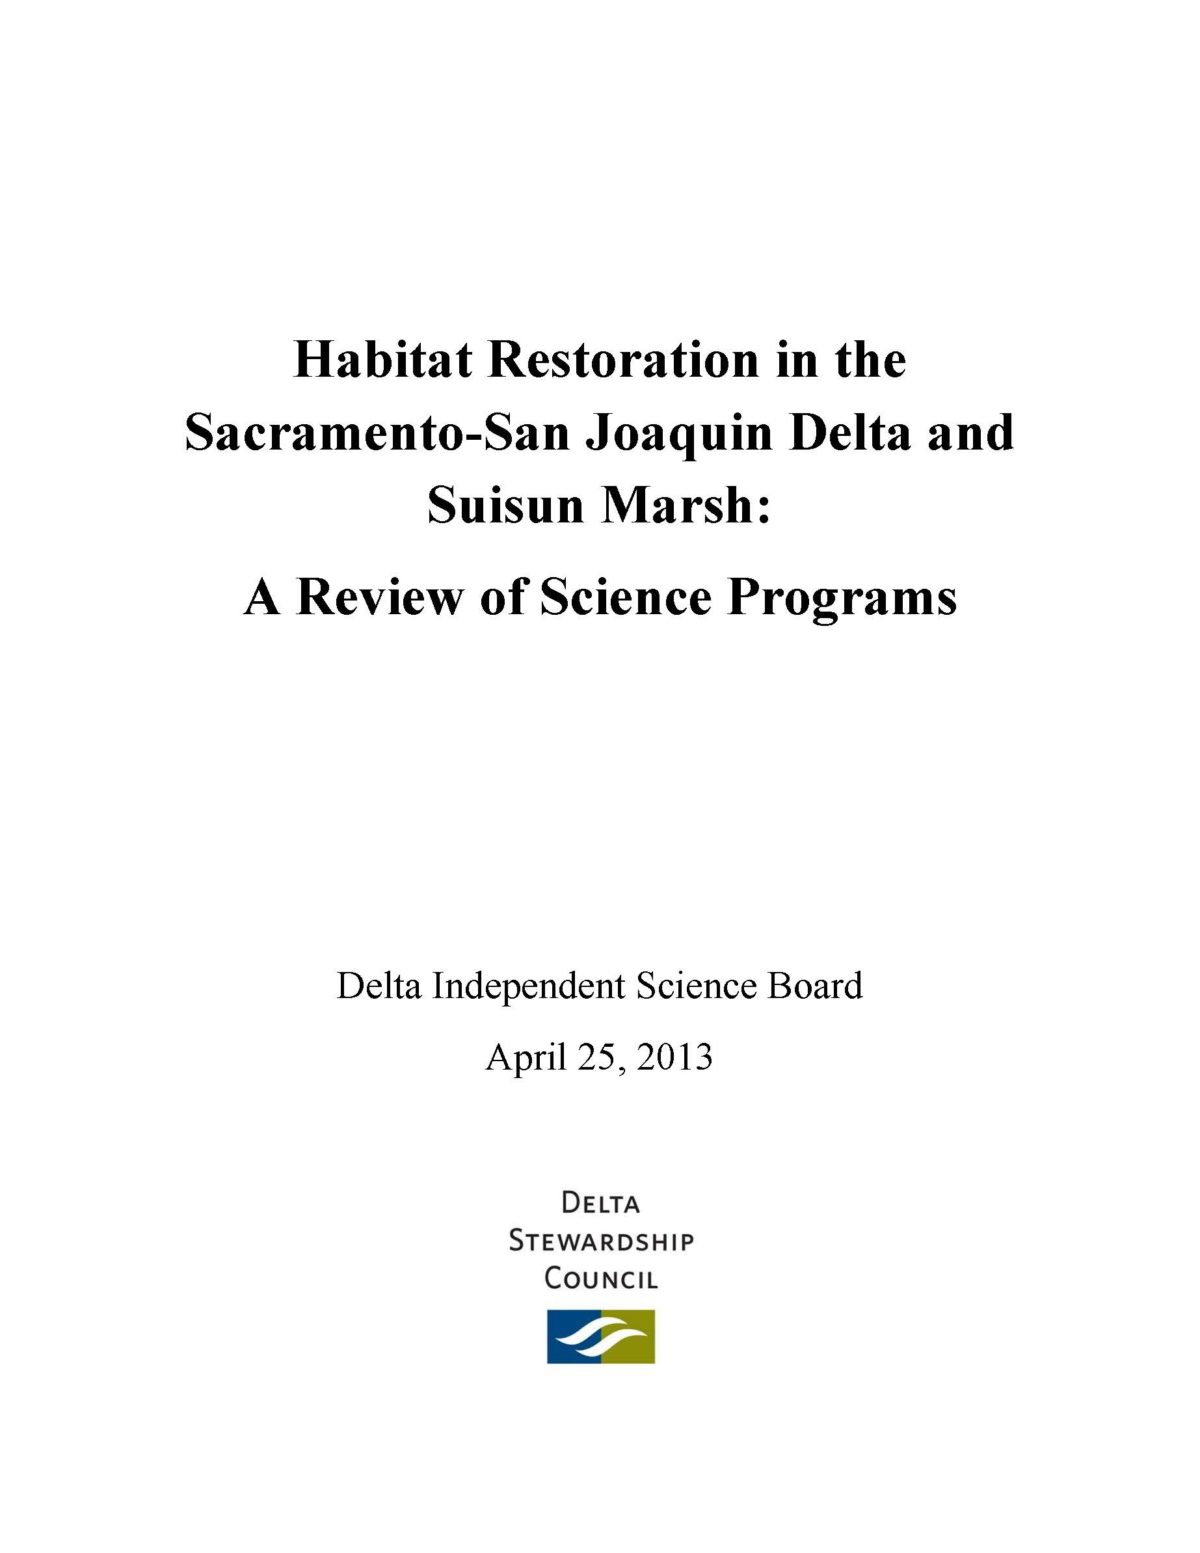 Habitat Restoration in the Sacramento-San Joaquin Delta and Suisun Marsh: A Review of Science Programs